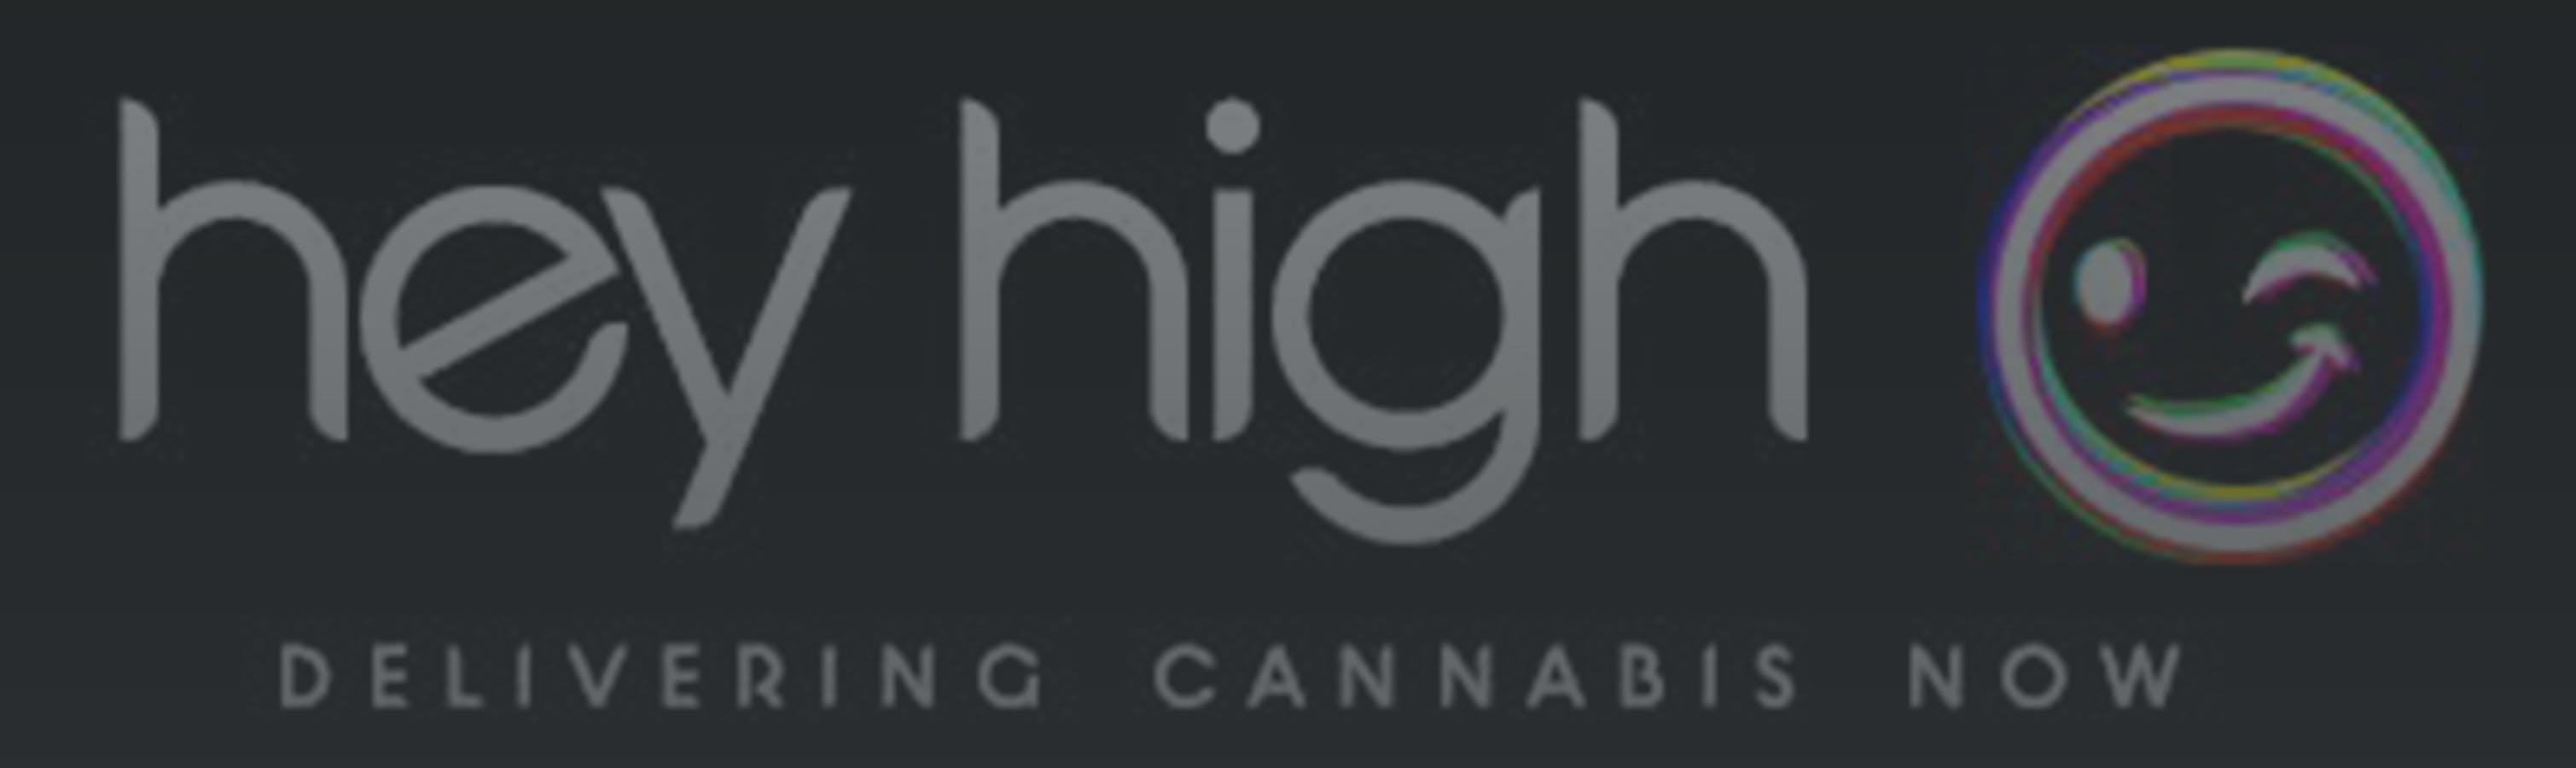 Hey High | Marijuana Dispensary | dutchie